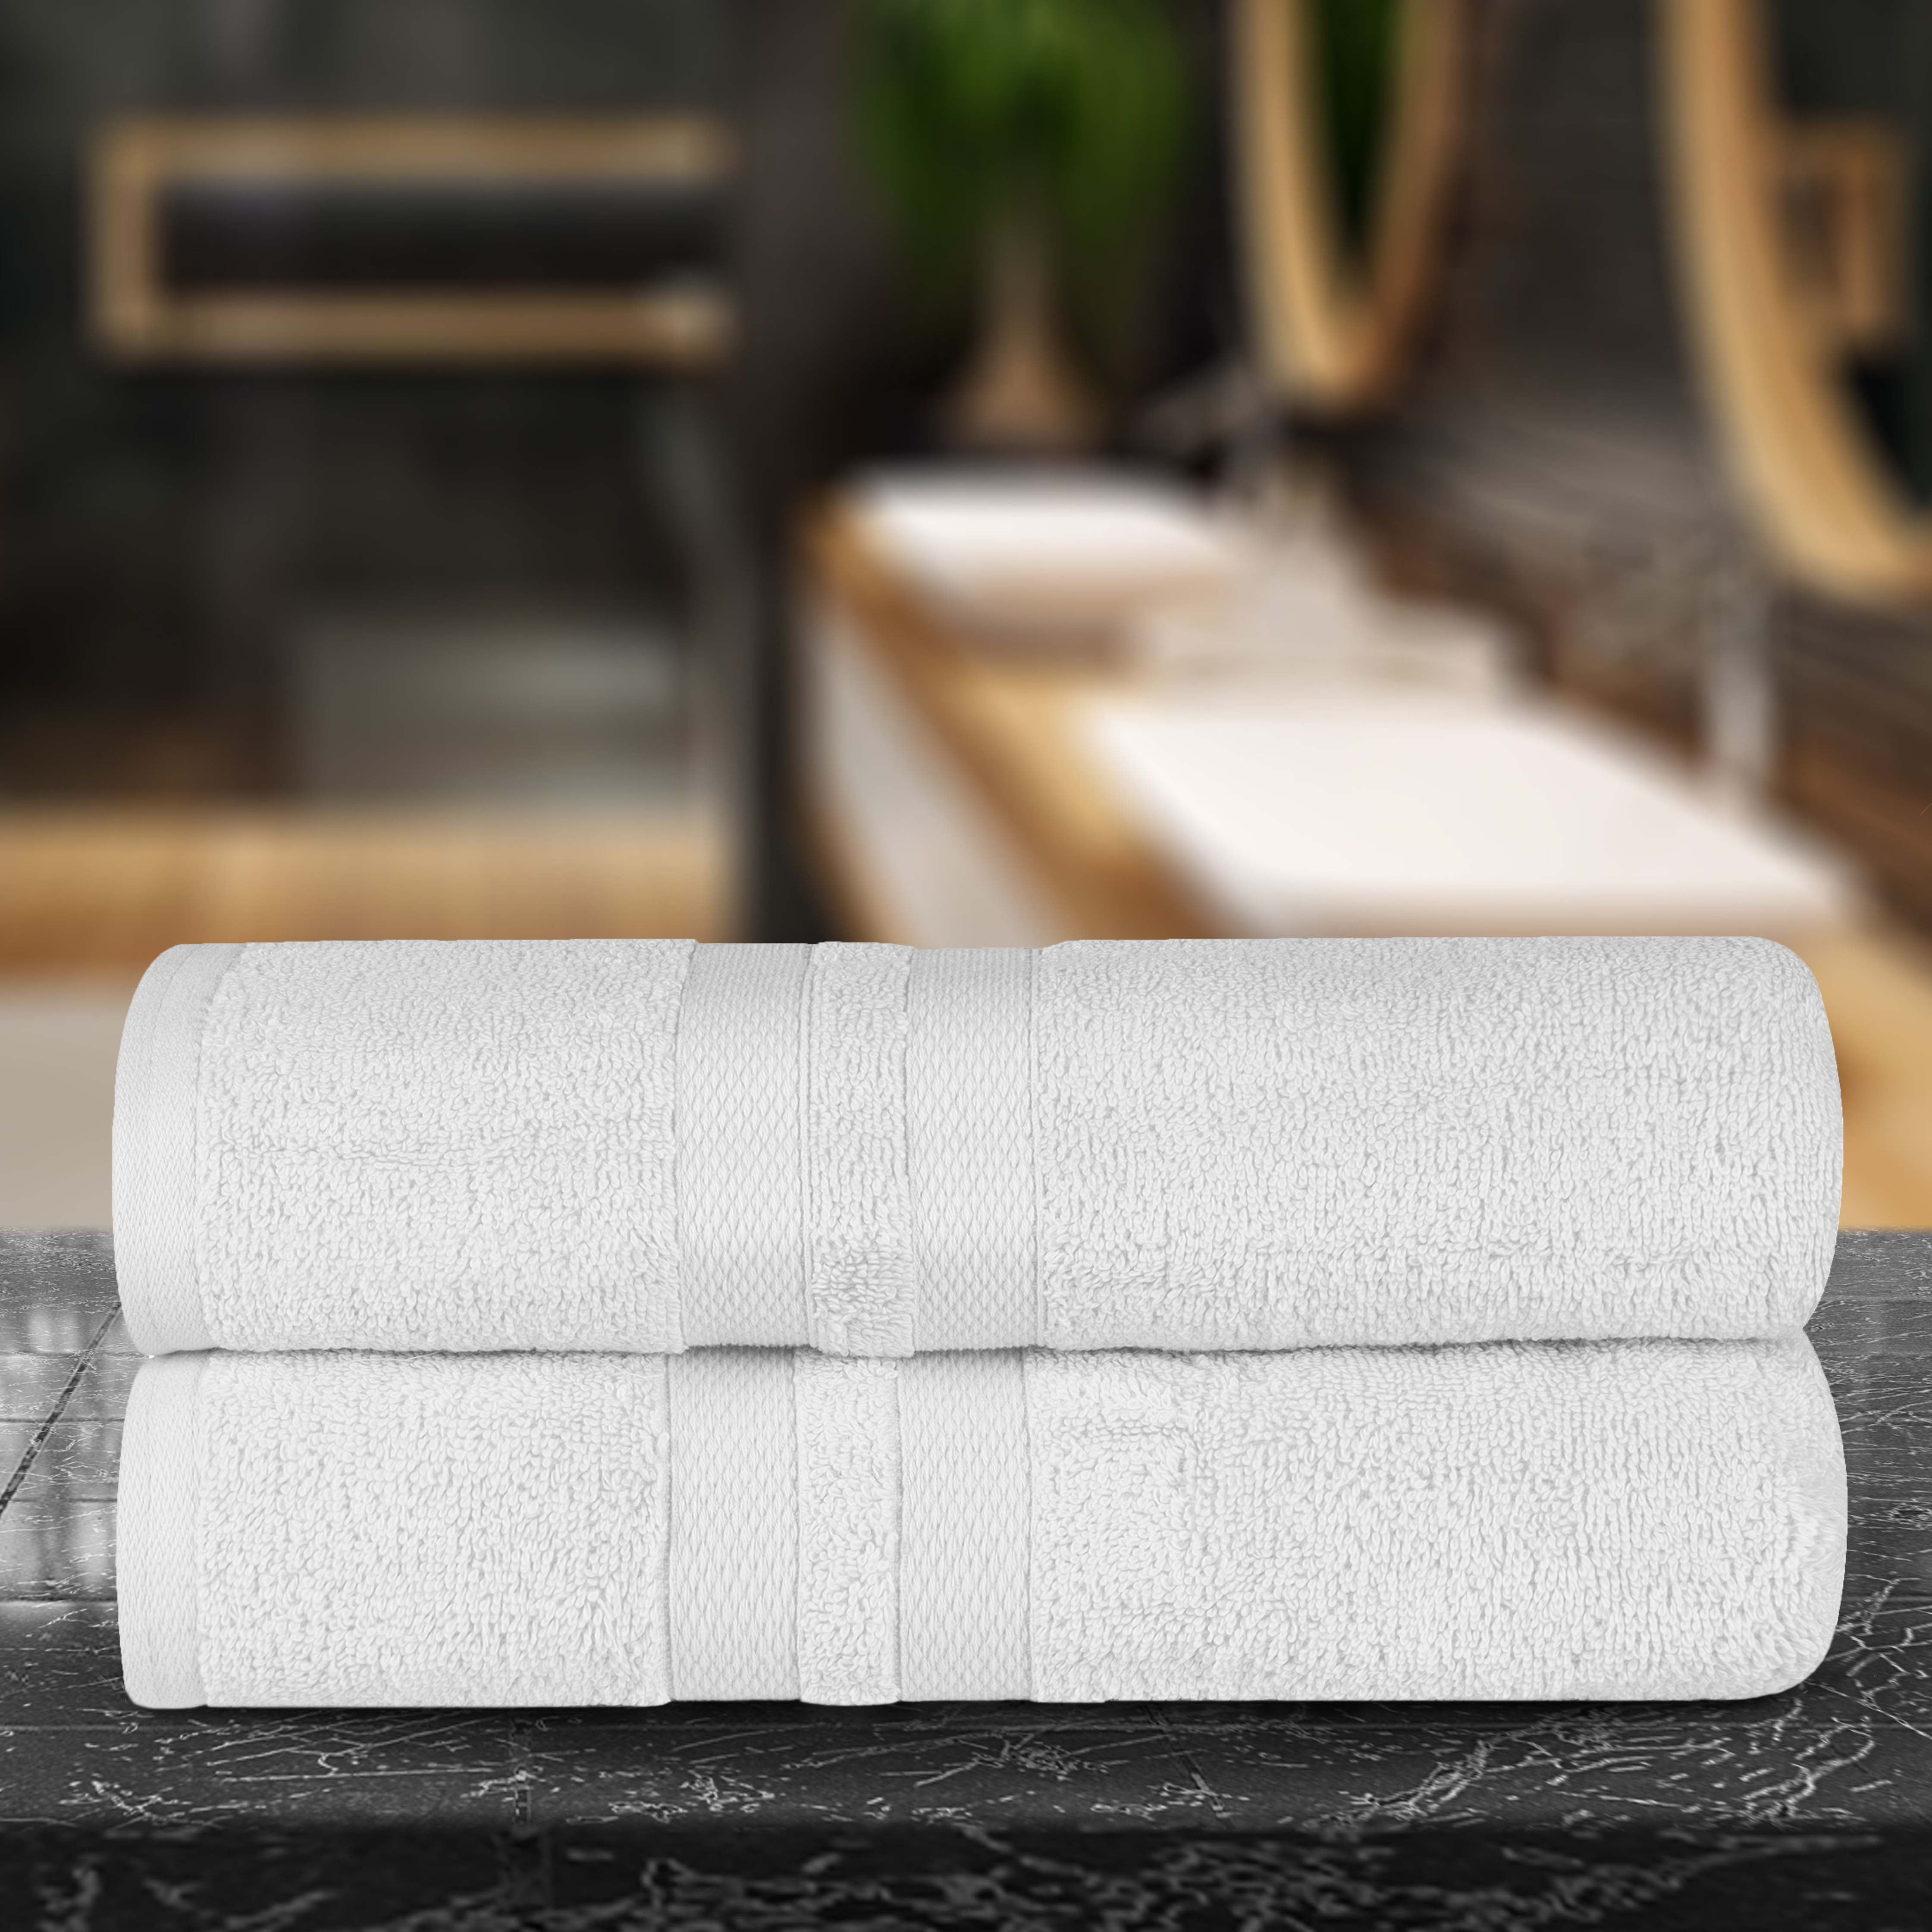 Brand – Pinzon 6 Piece Pima Cotton Bath Towel Set - Mineral Green